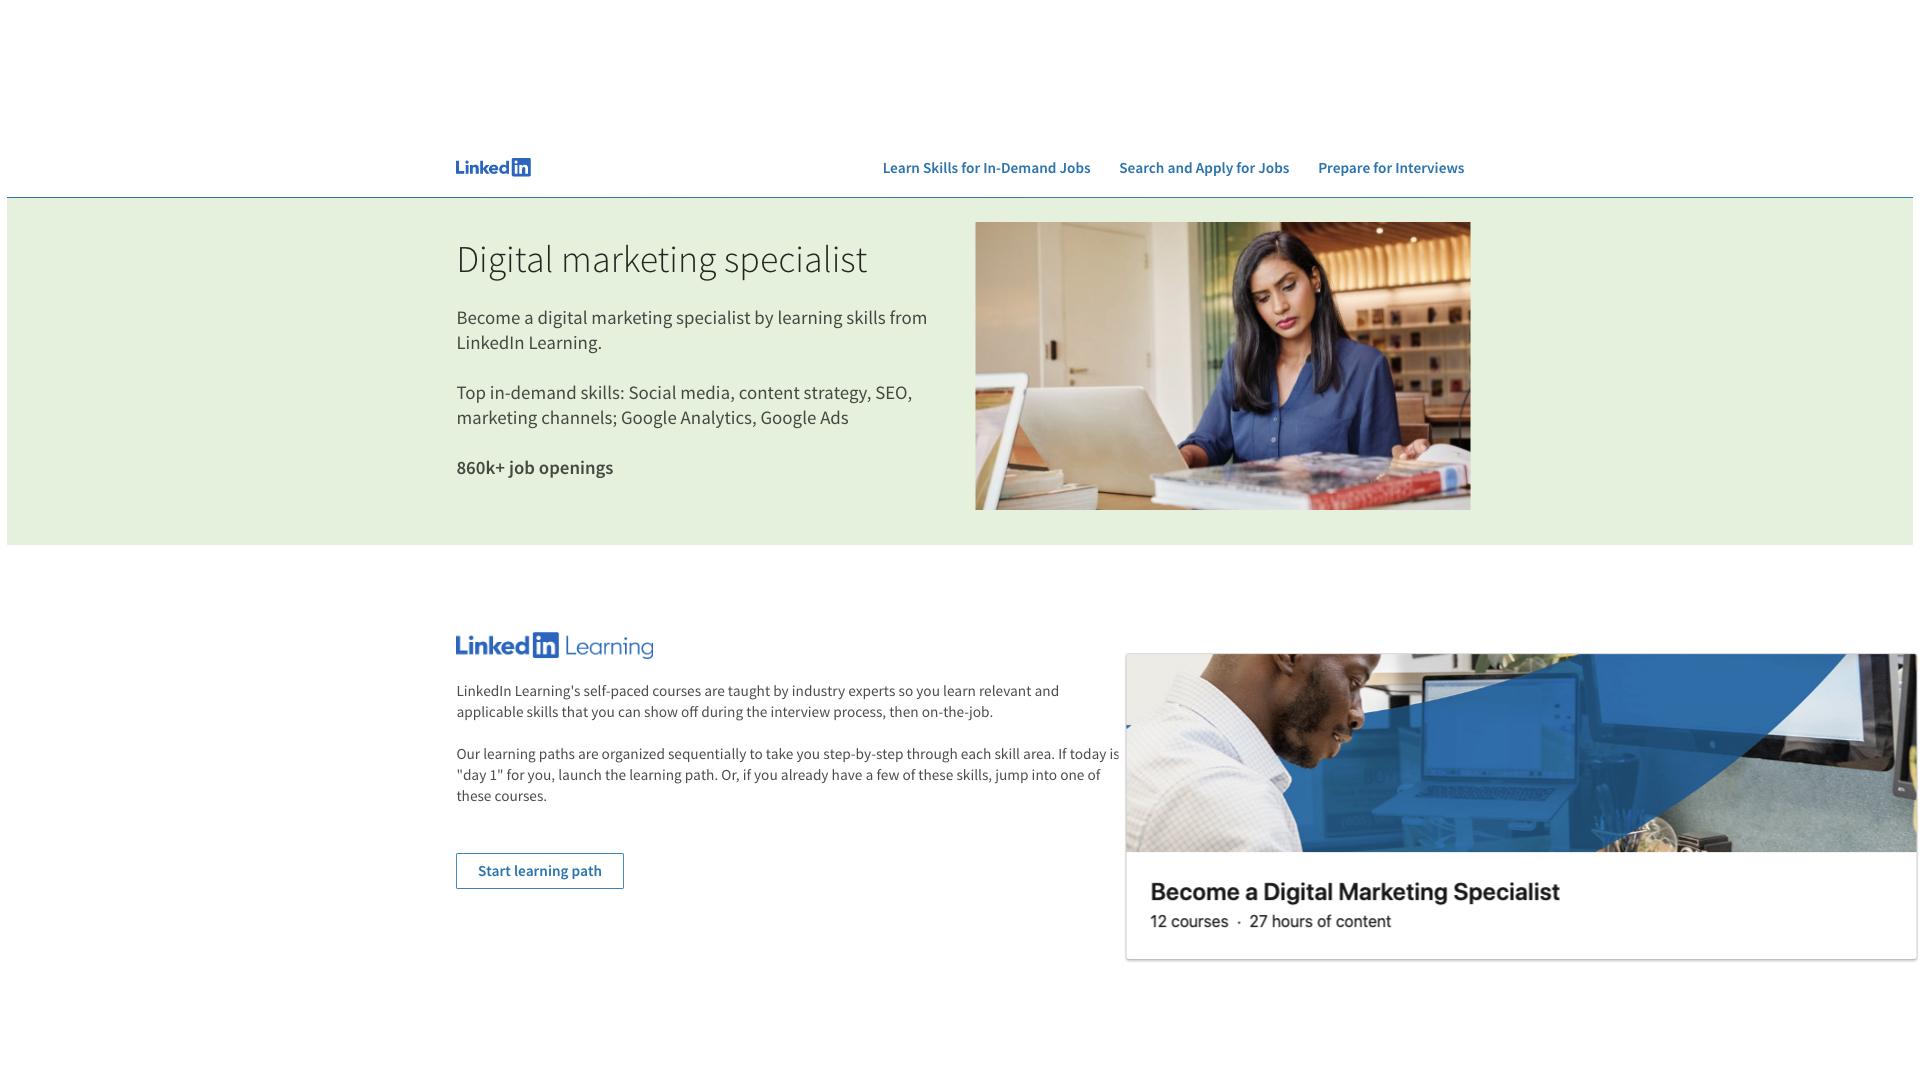 Digital marketing specialist path